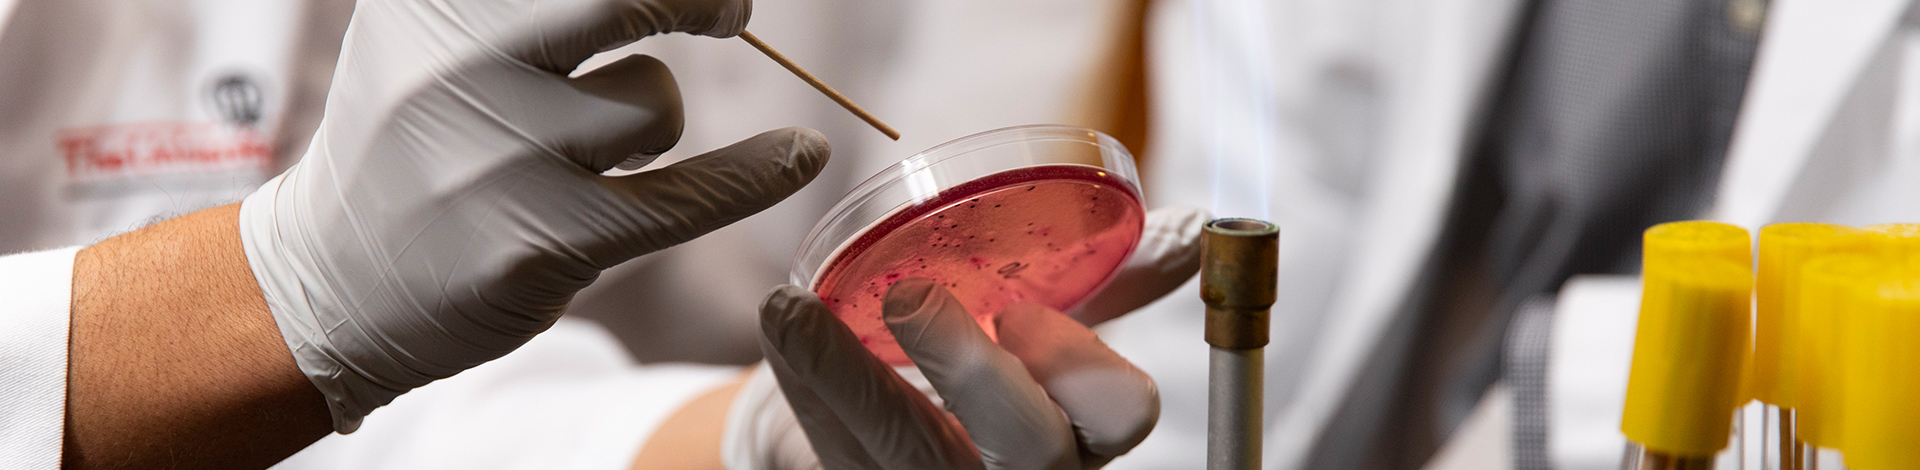 scientist using petri dish